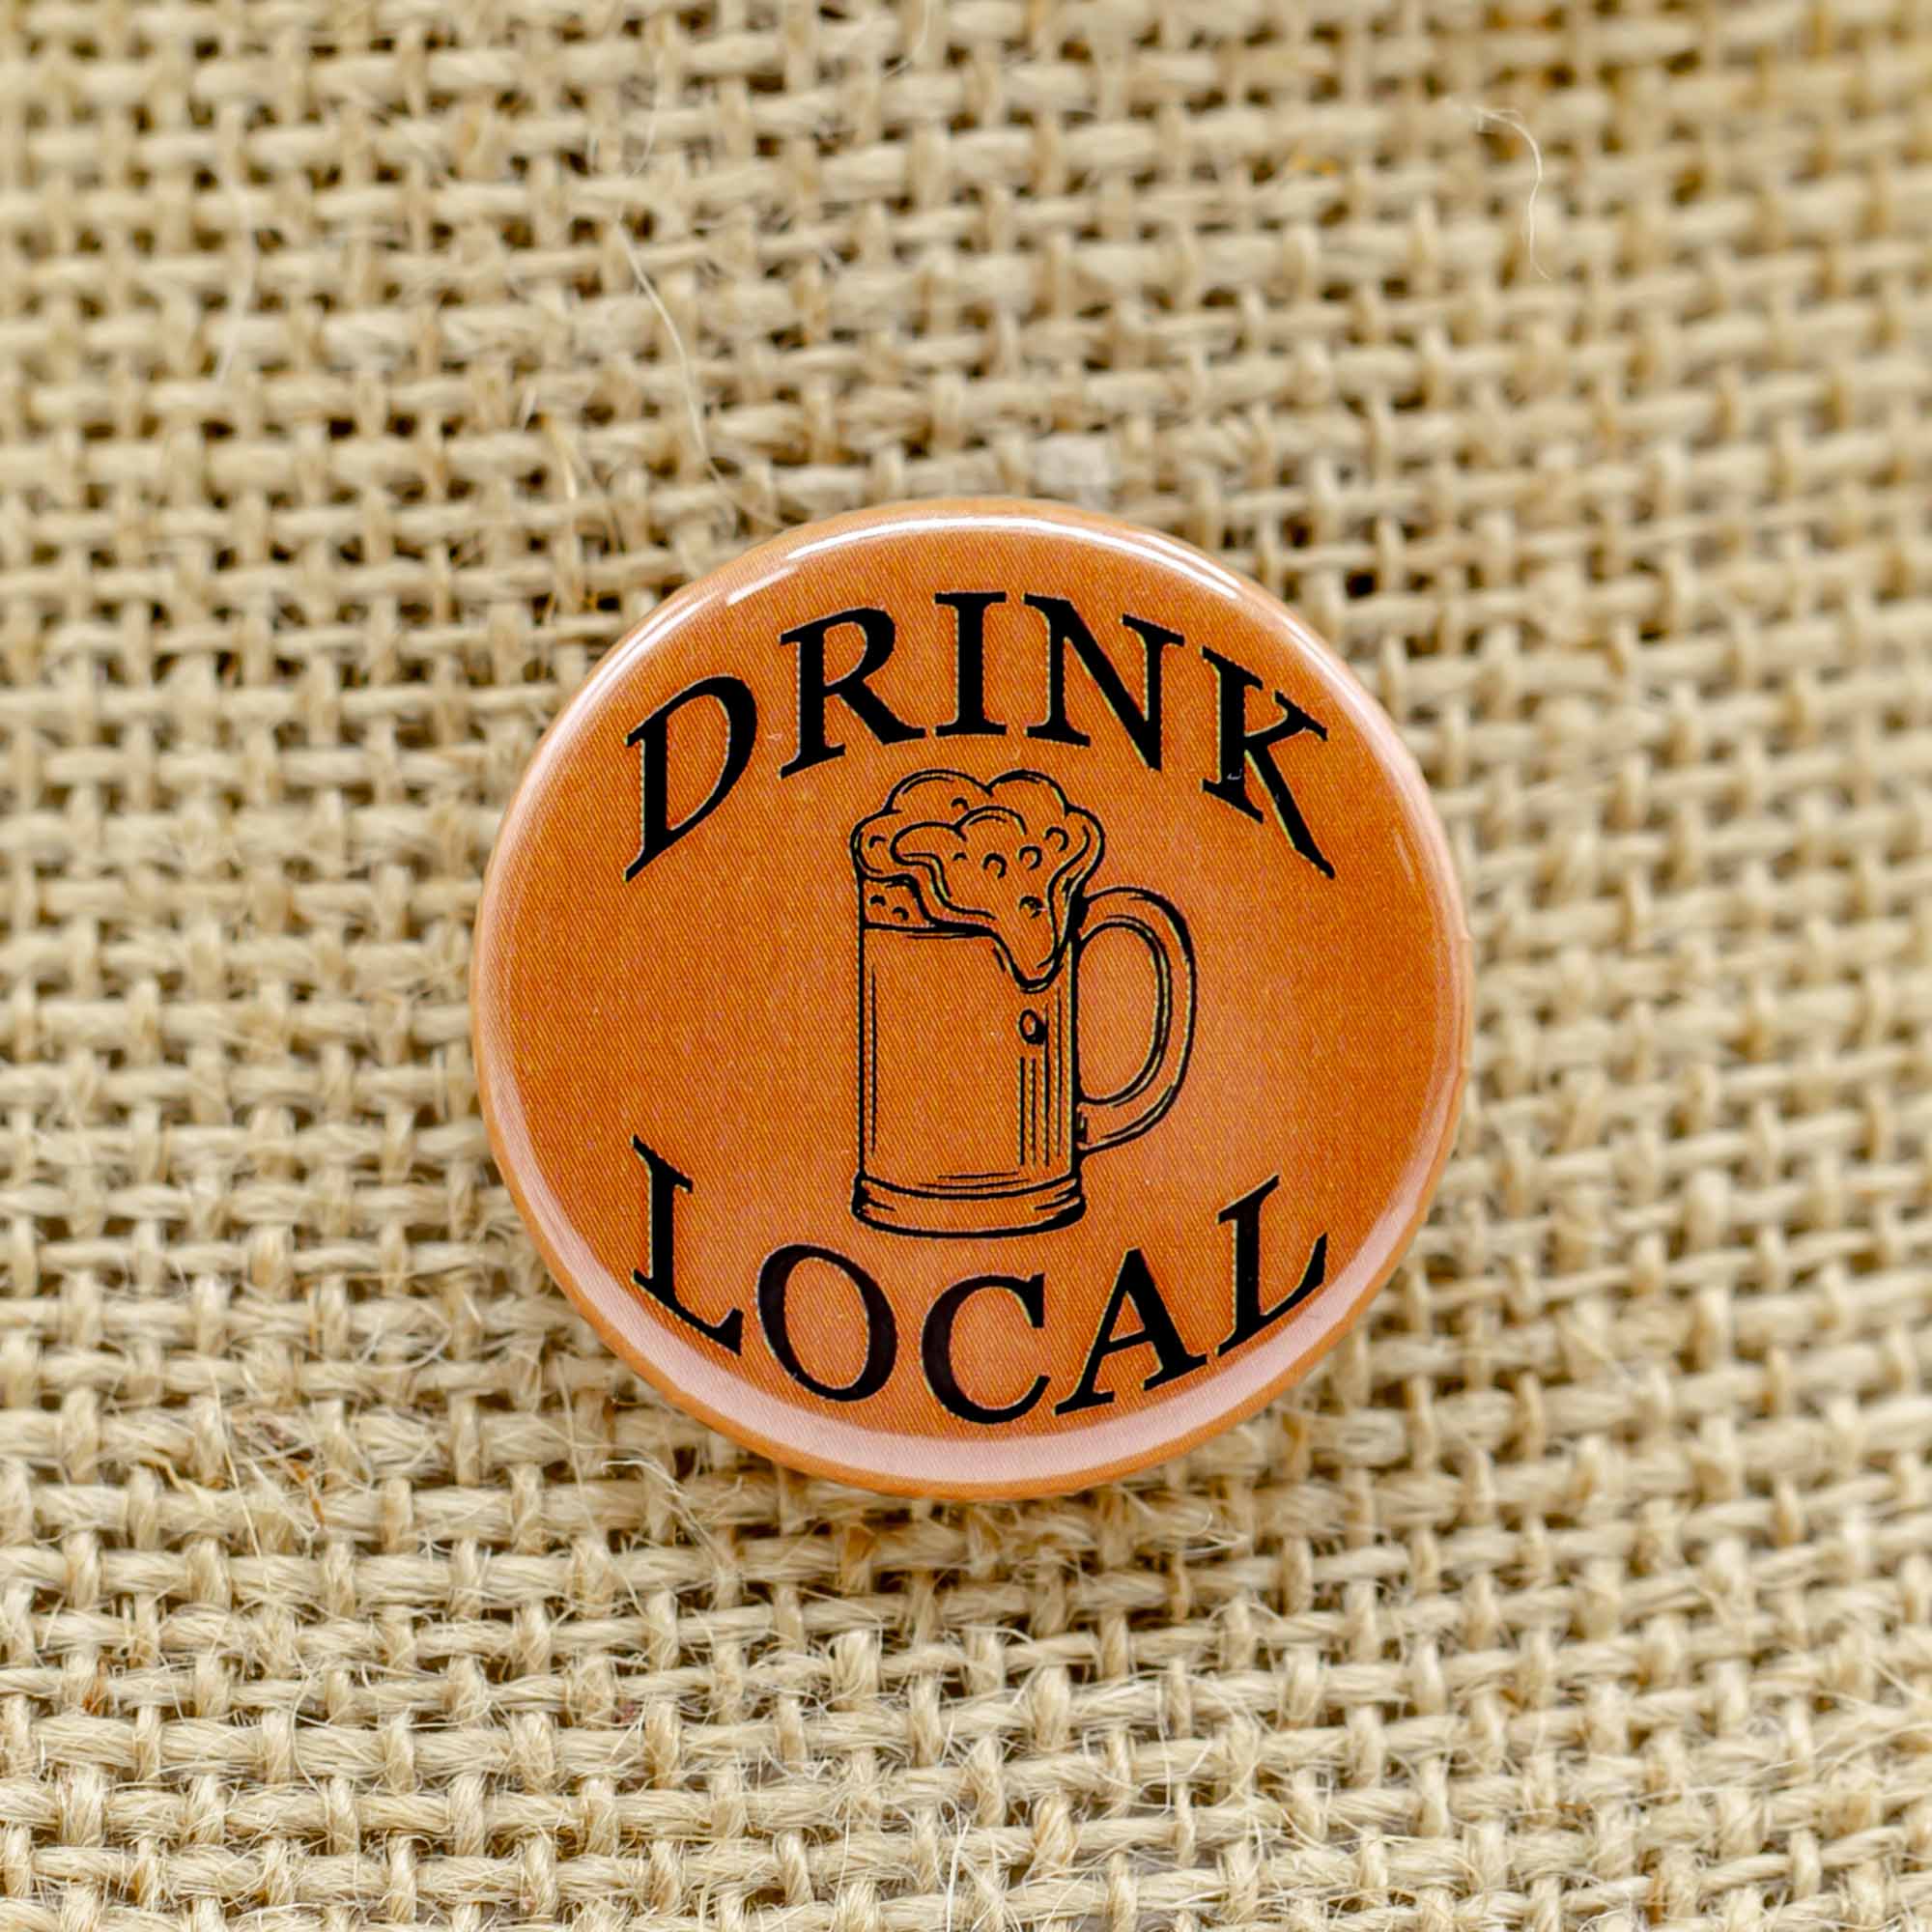 Drink Local Mug Button - Mortise And Tenon